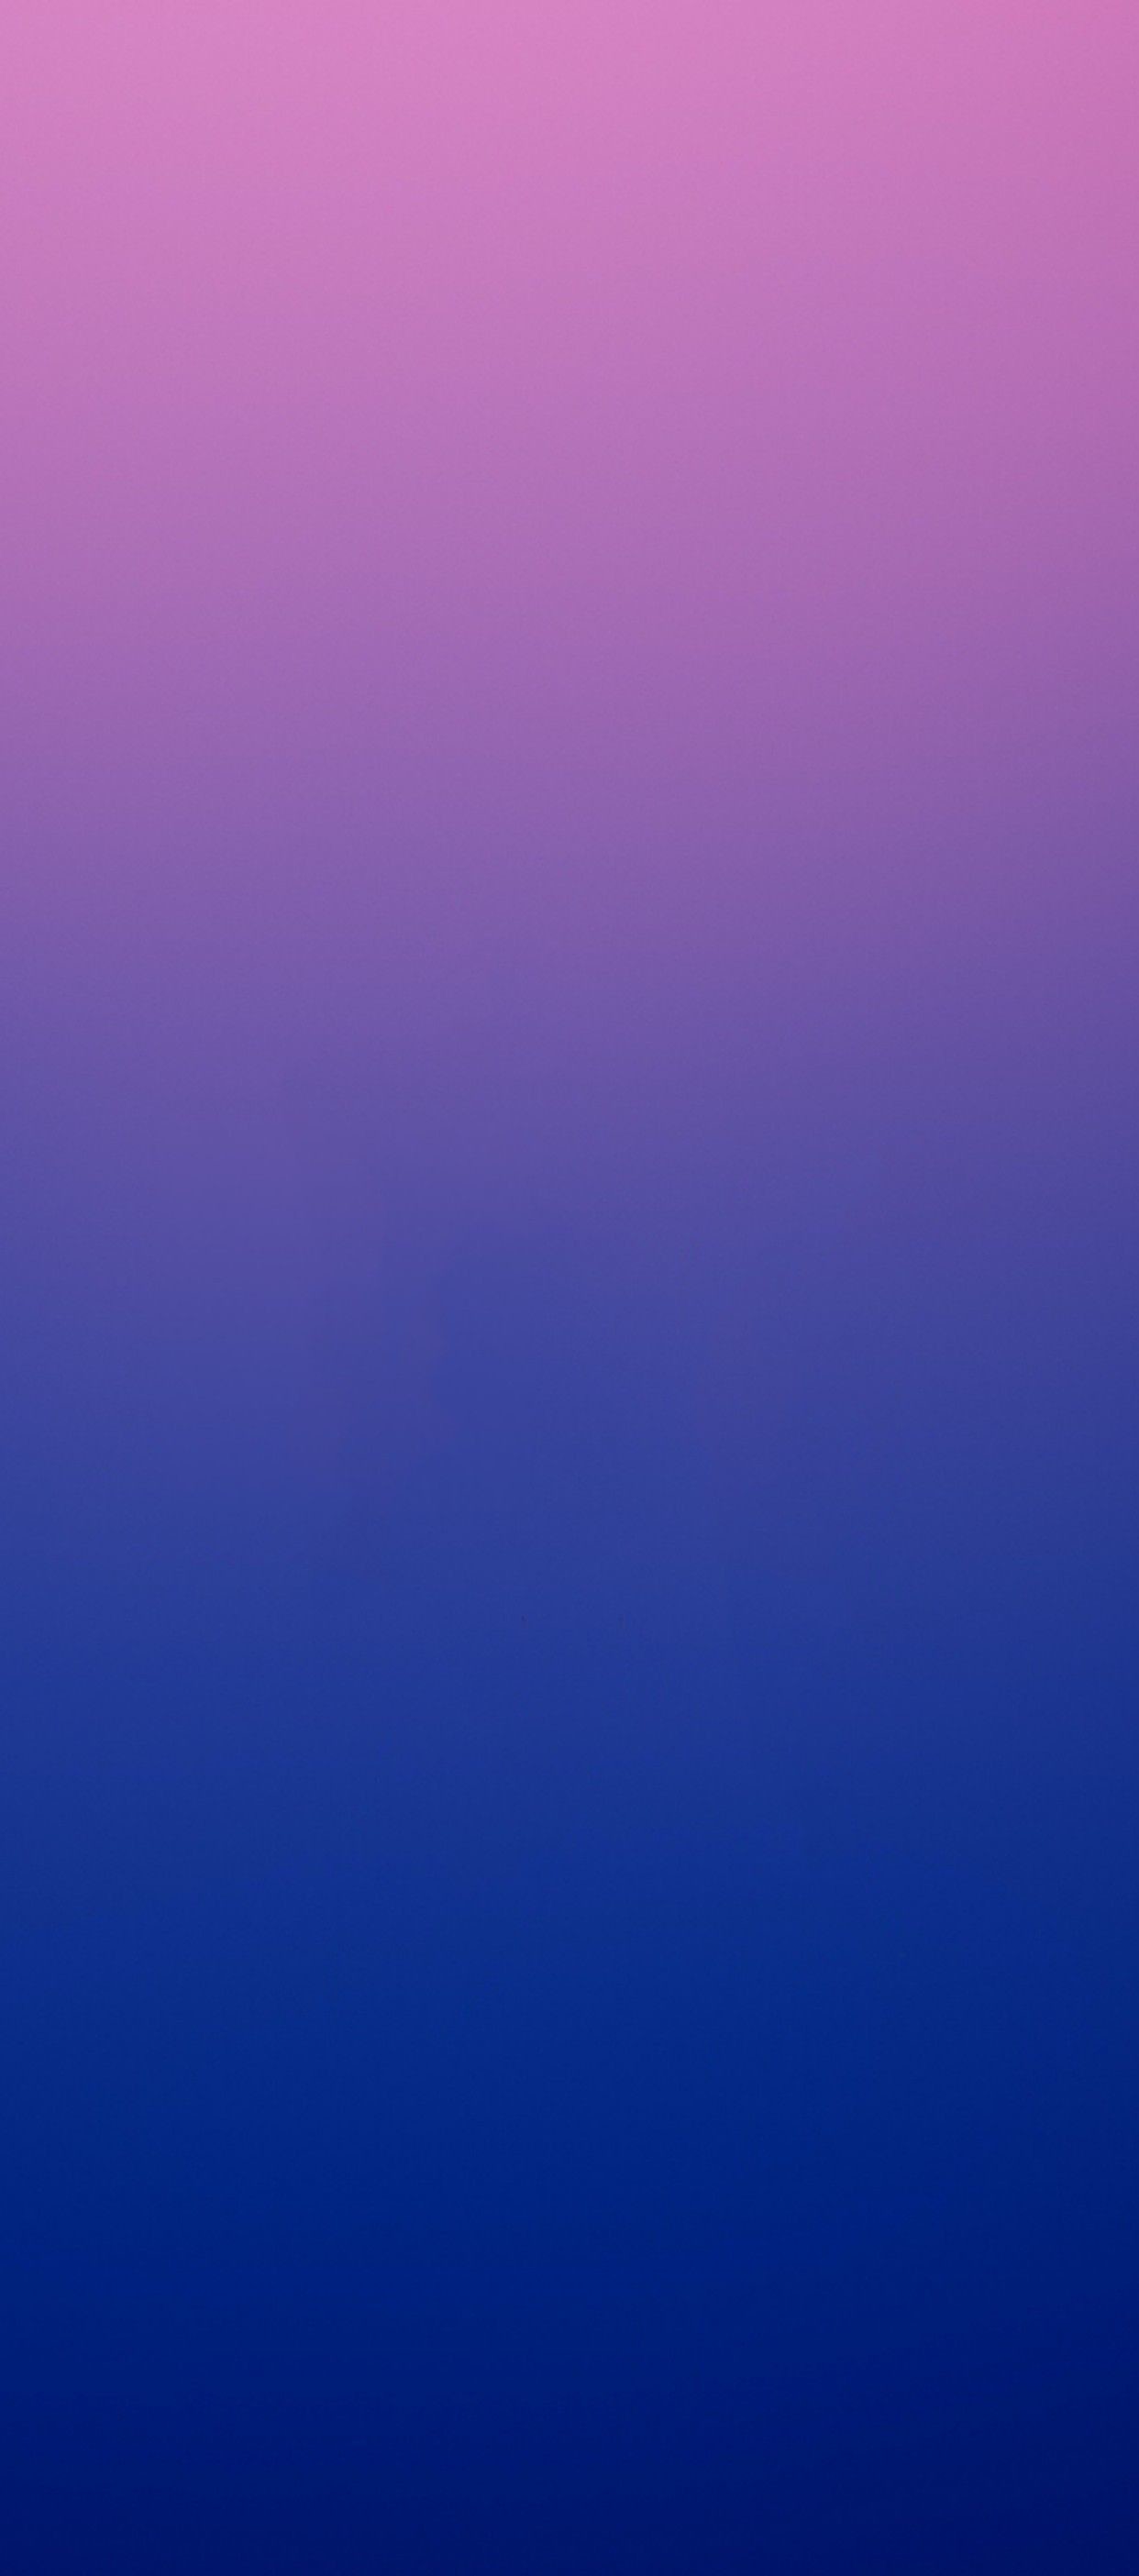 1242x2809, Ios 11, Iphone X, Purple, Pink, Blue, Clean, - Blue Simple Wallpaper  Iphone - 1242x2809 Wallpaper 